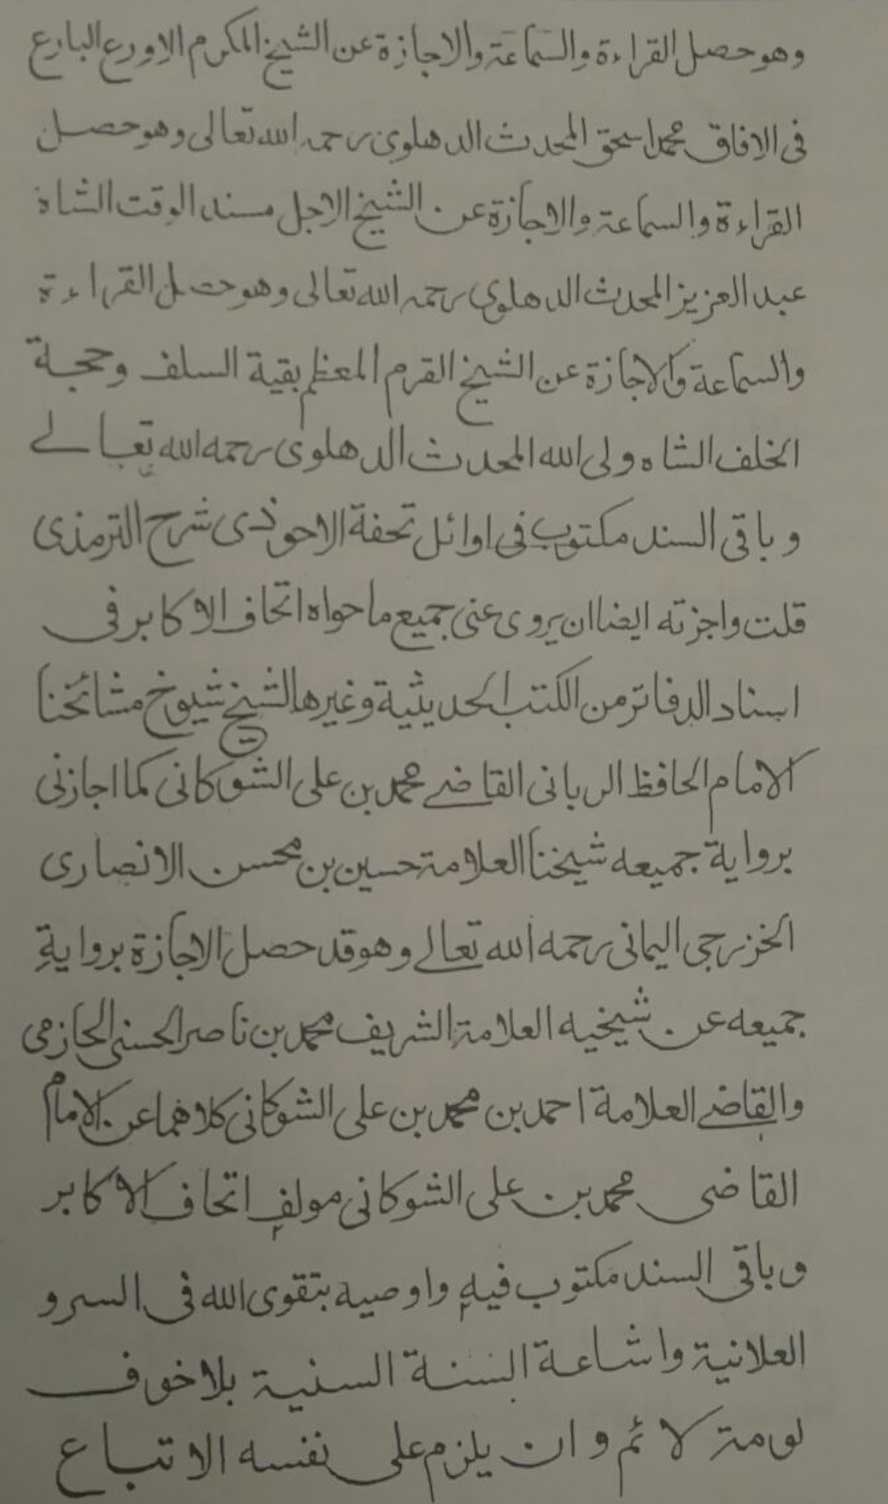 Ijazah-of-Shaikh-Muhammad-ibn-Ibrham-from-Shaikh-Mubarakpuri-2.jpg